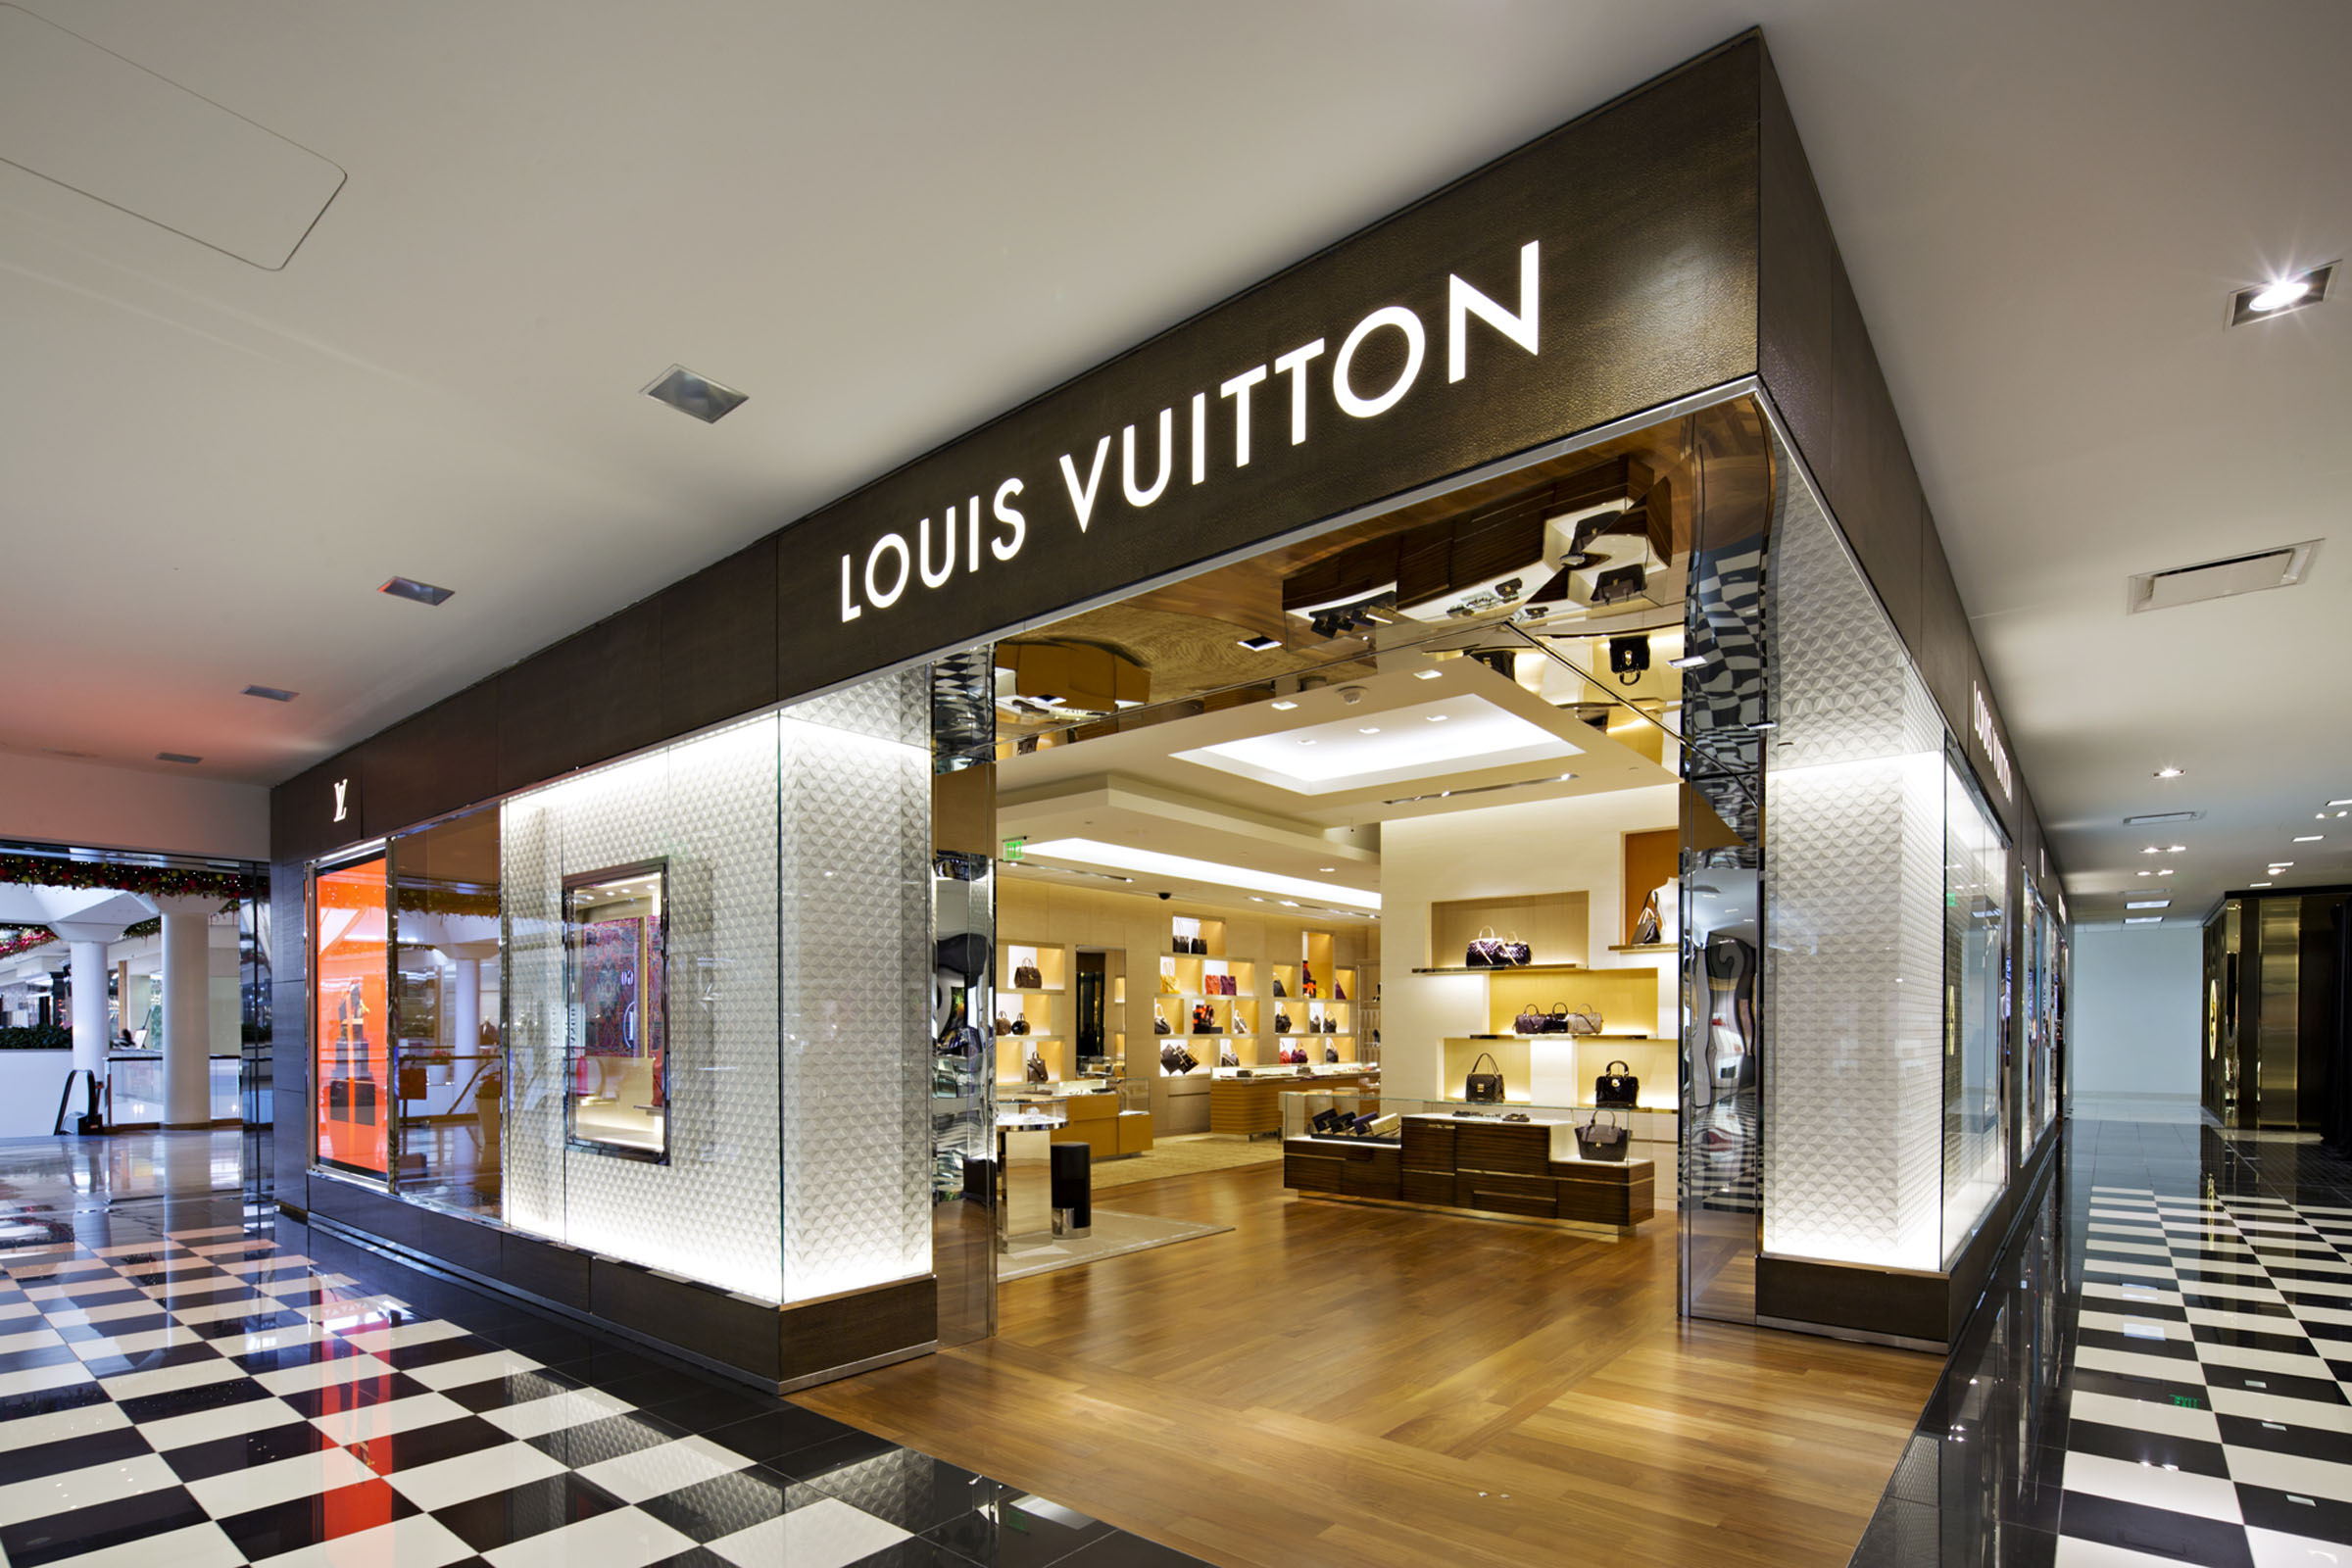 Dubai Shopping Malls: Louis Vuitton Outlet at The Dubai Mall